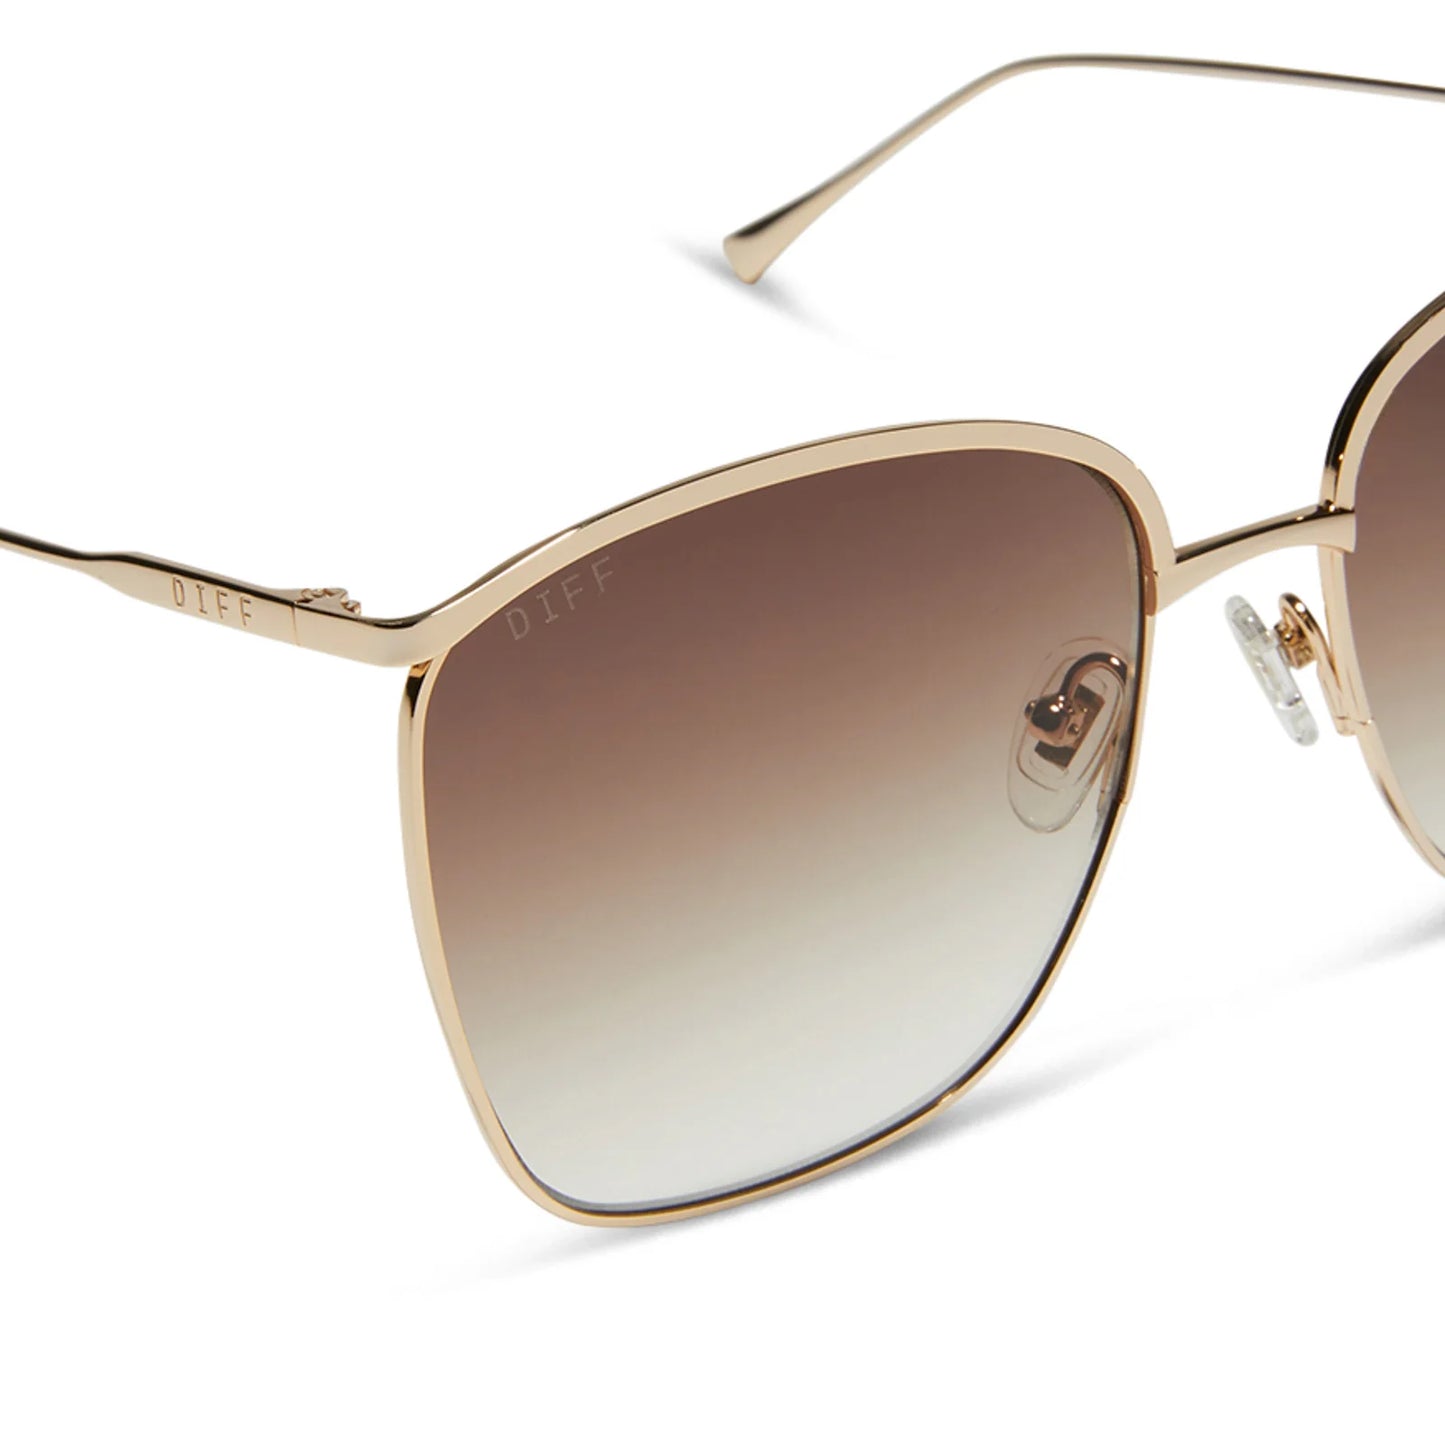 DIFF Eyewear - Vittoria - Gold Brown Gradient Polarized Sunglasses